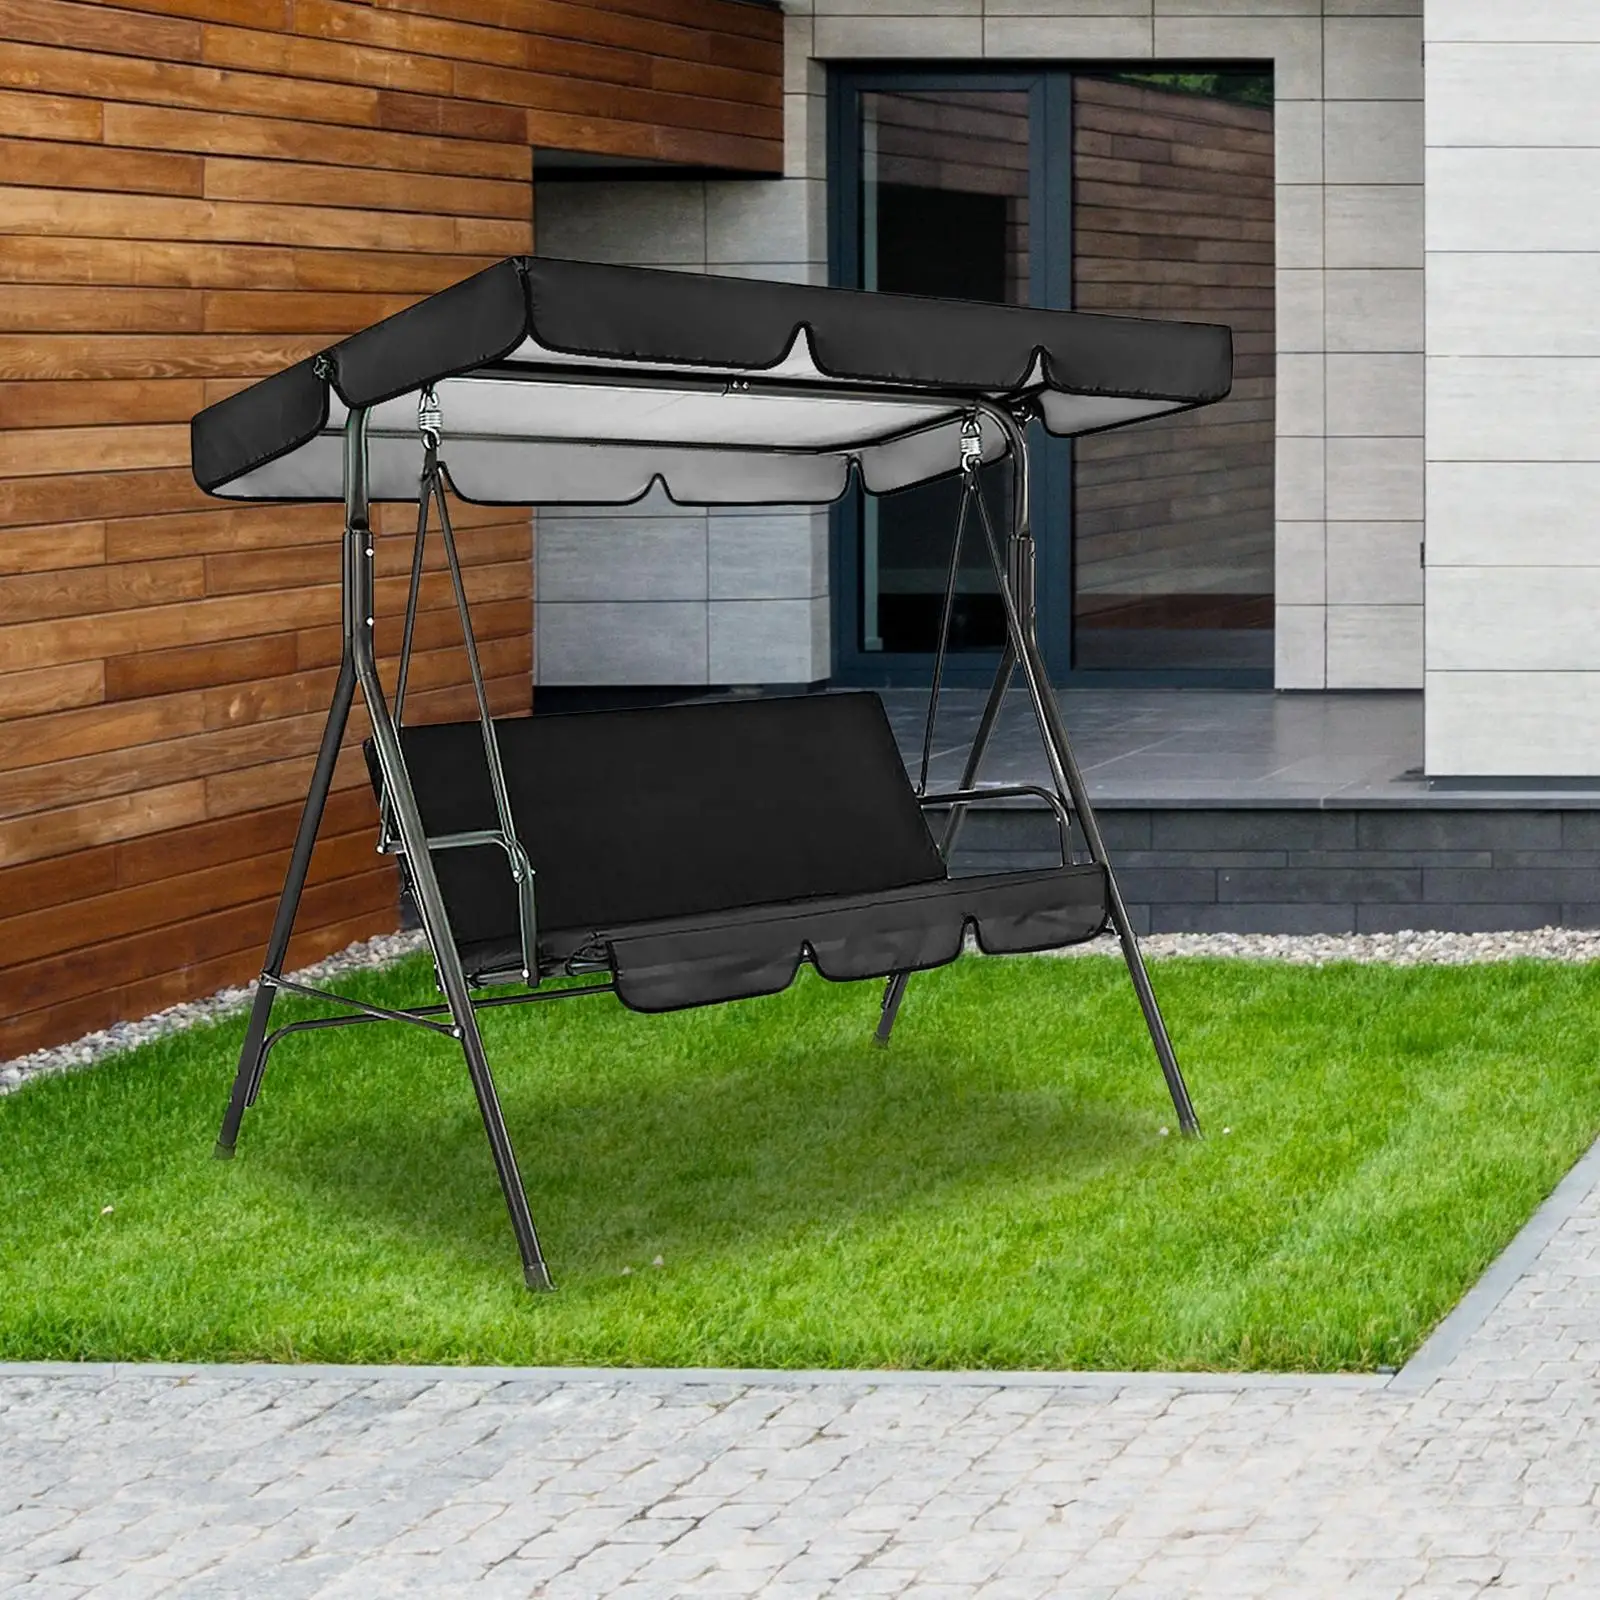 Patio Swing Canopy Replacement Waterproof Durable Rainproof Dustproof Garden Swing Chair Cover for Garden Canopy Yard Furniture